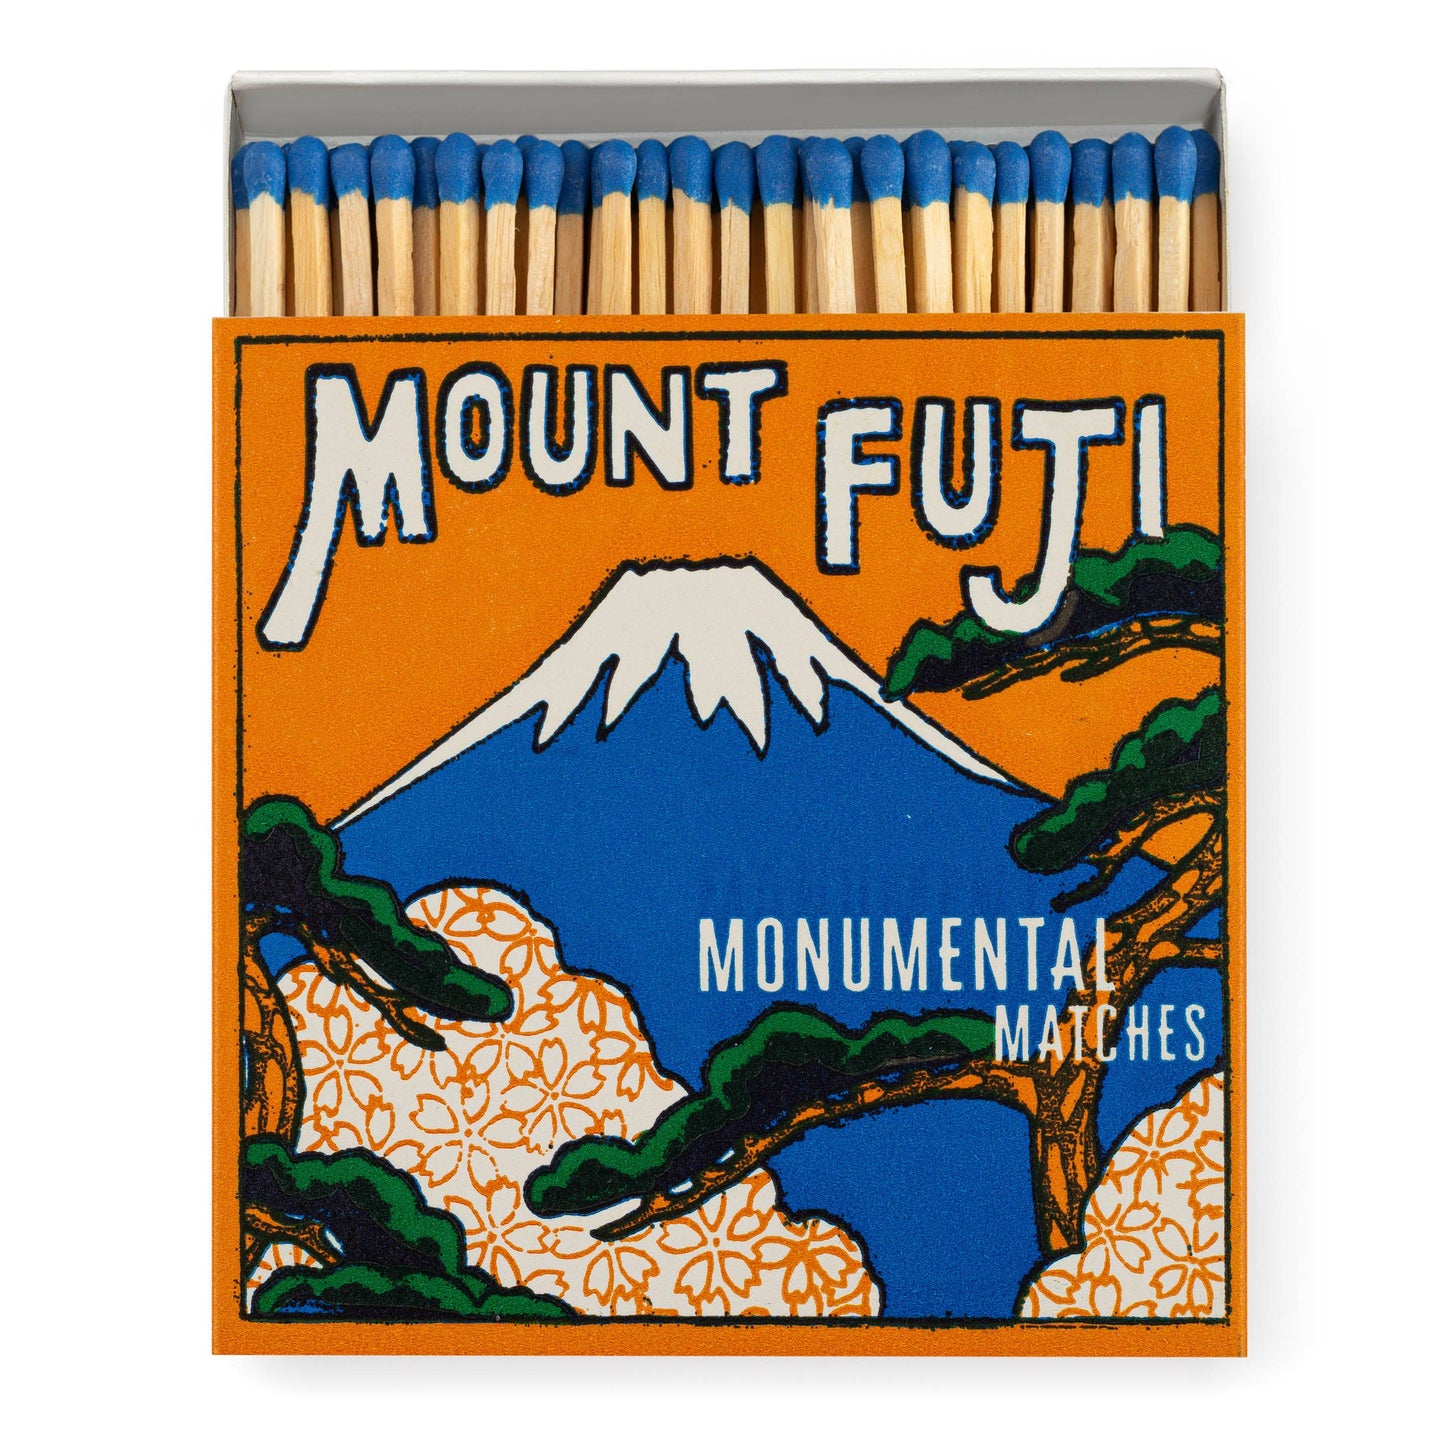 Mount Fuji "Monumental" MatchBox